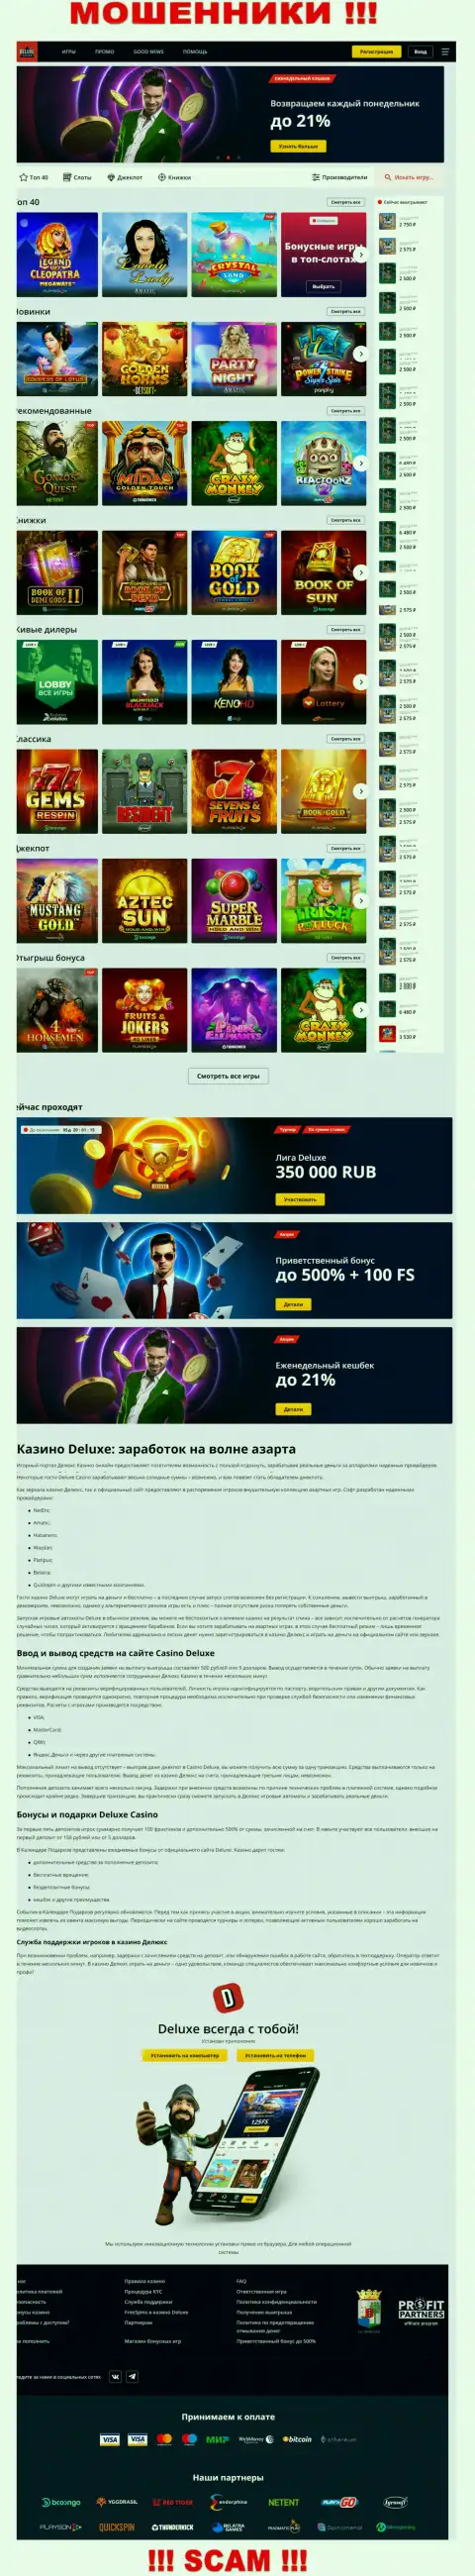 Официальная онлайн-страница компании Deluxe Casino